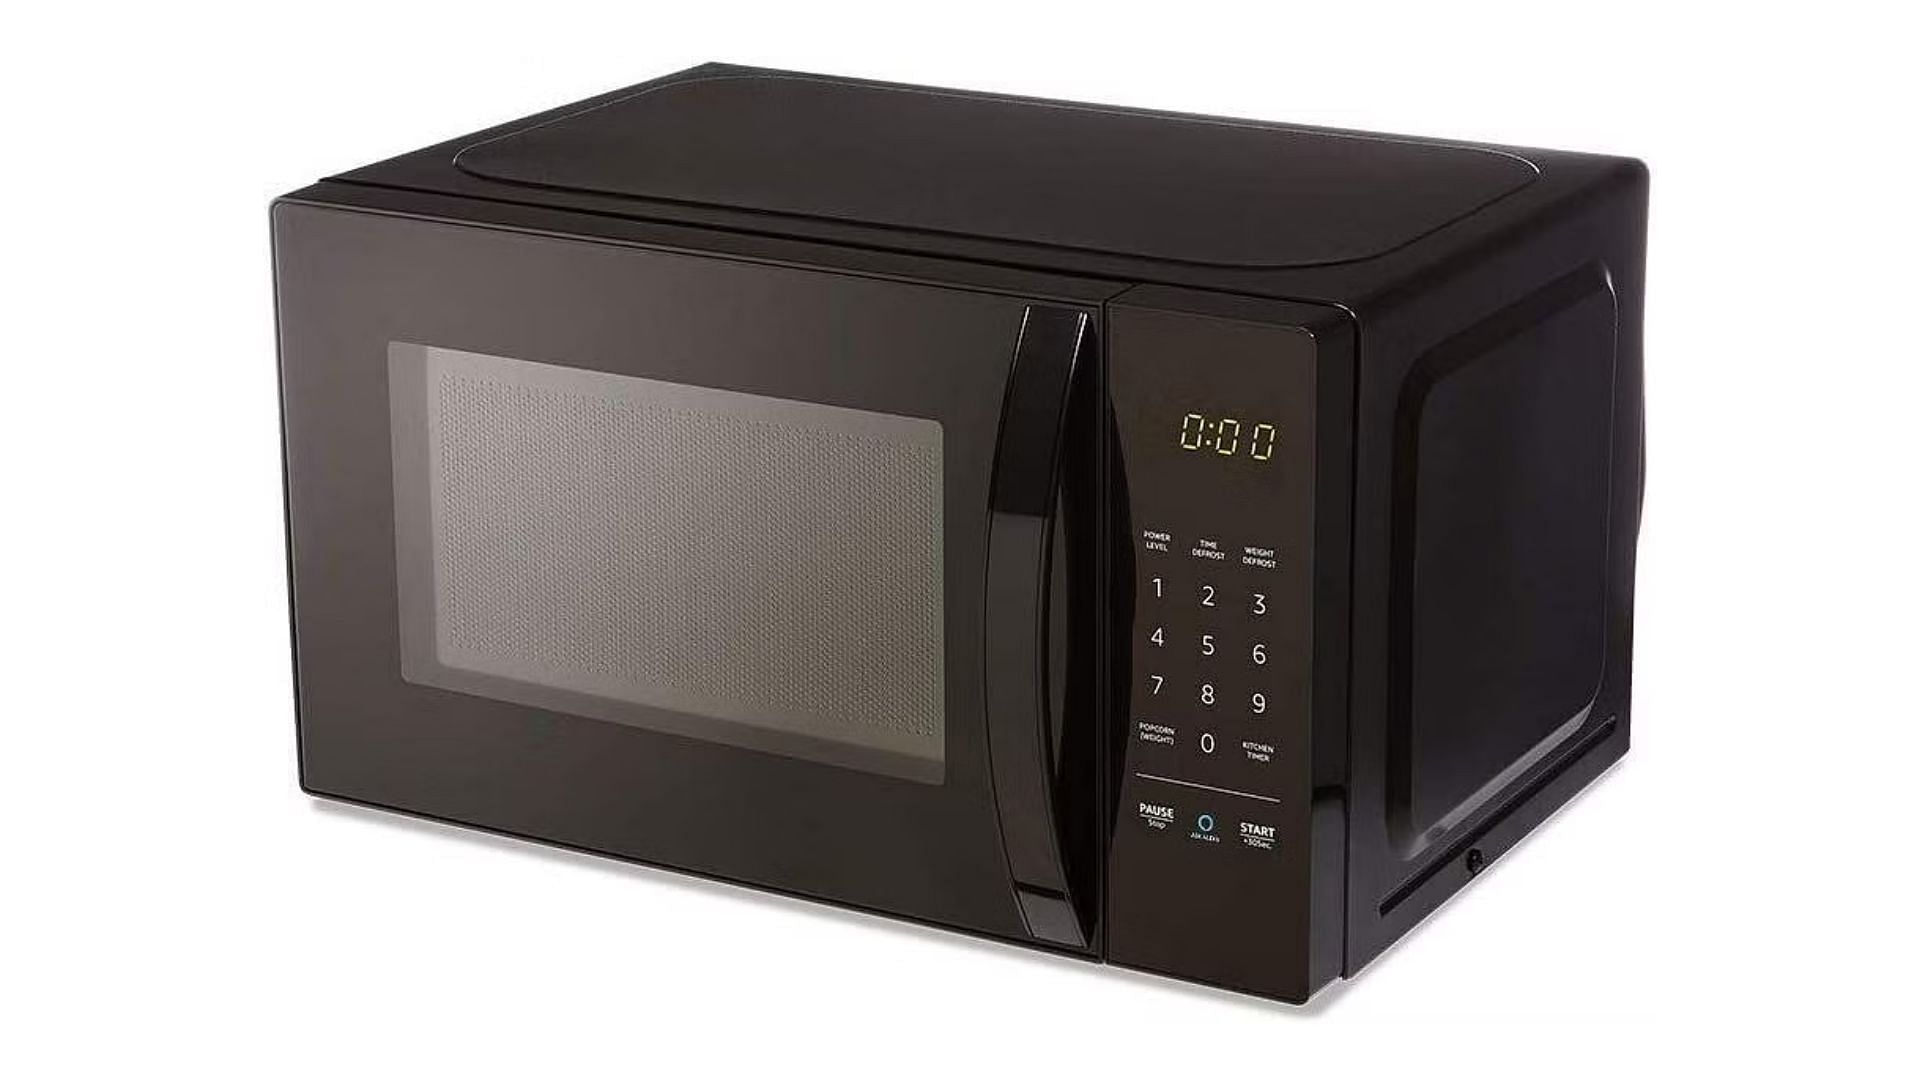 The AmazonBasics Microwave (Image via Amazon)